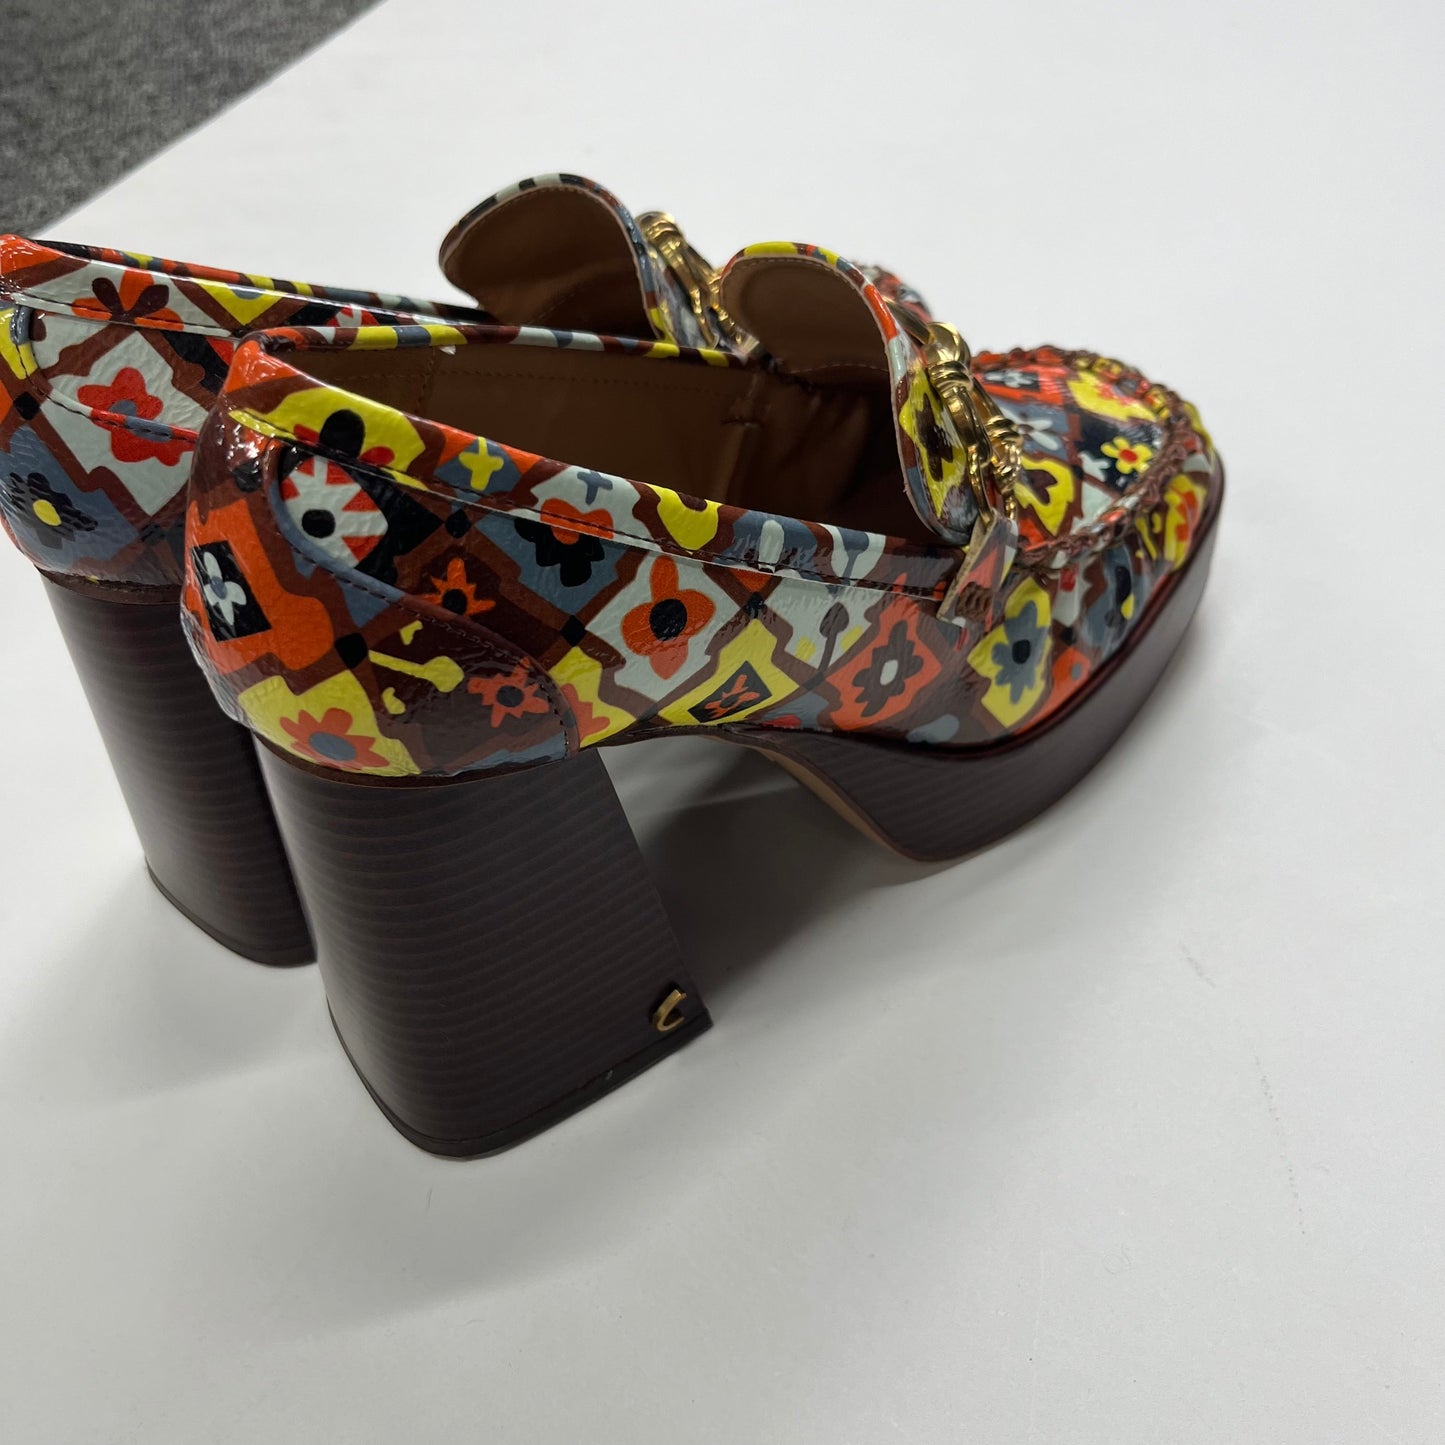 Multi-colored Shoes Heels Block Sam Edelman, Size 9